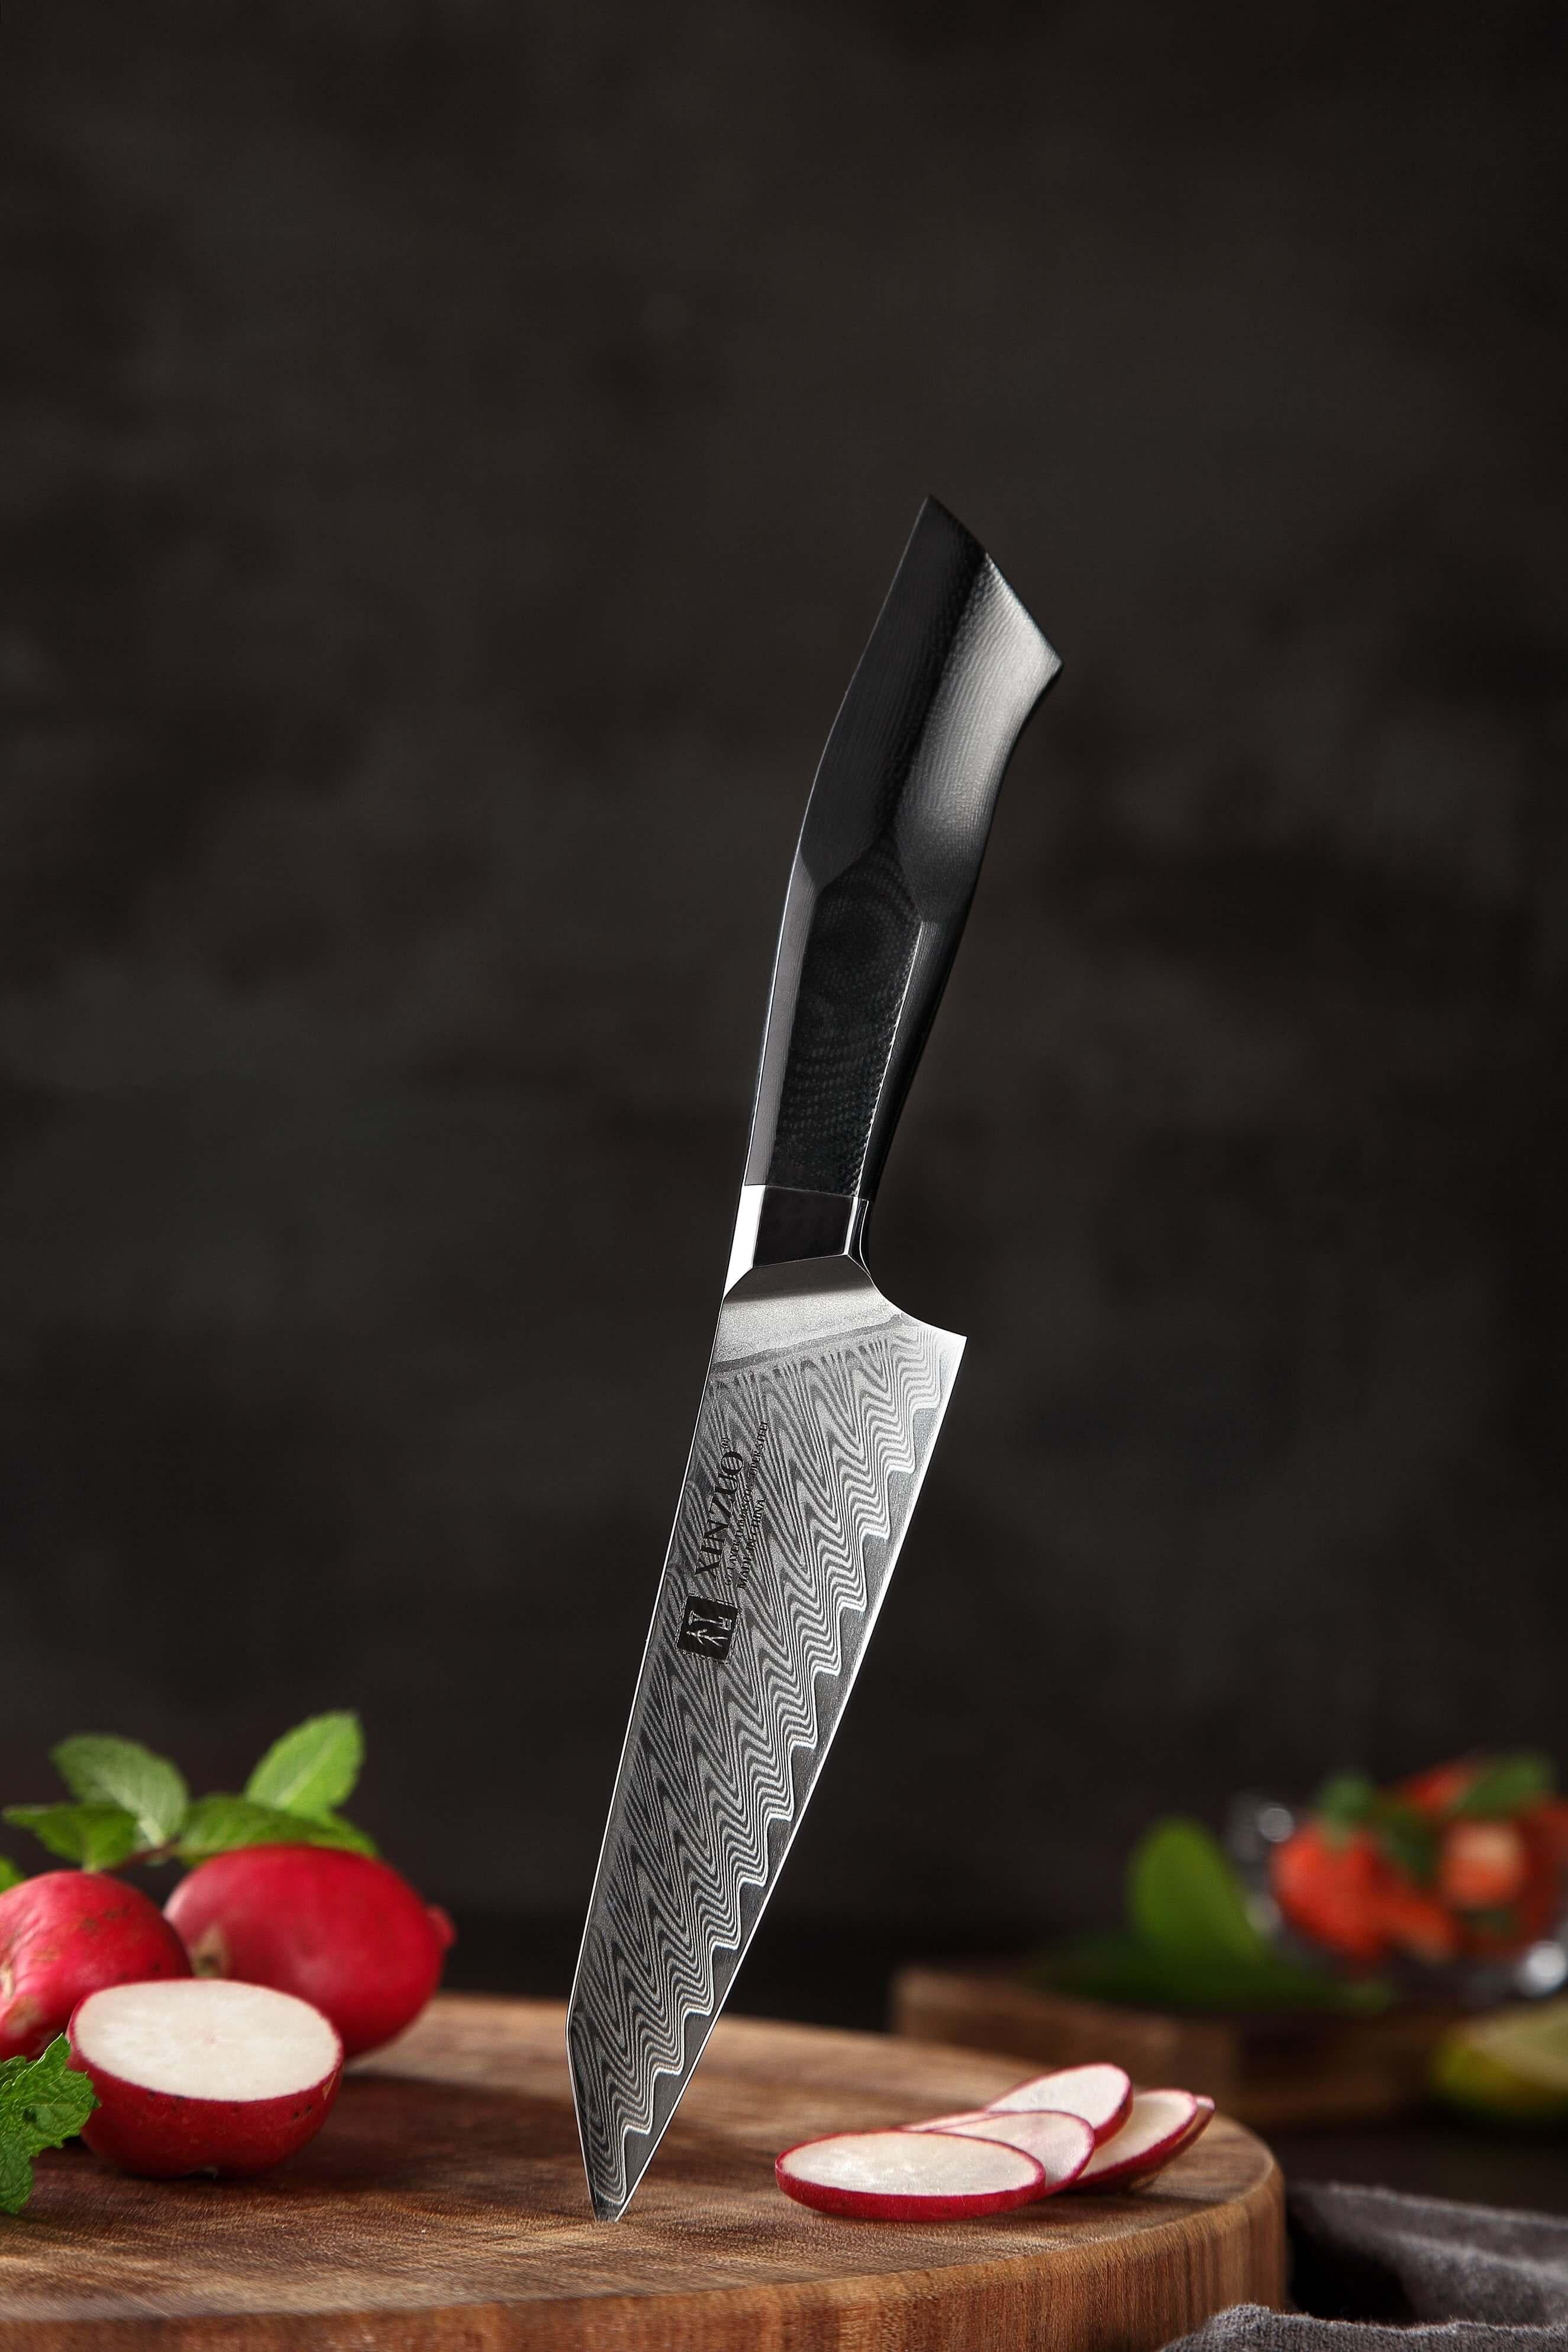 XINZUO 8.5'' Inch Chef Knife German 1.4116 Stainless Steel Kitchen